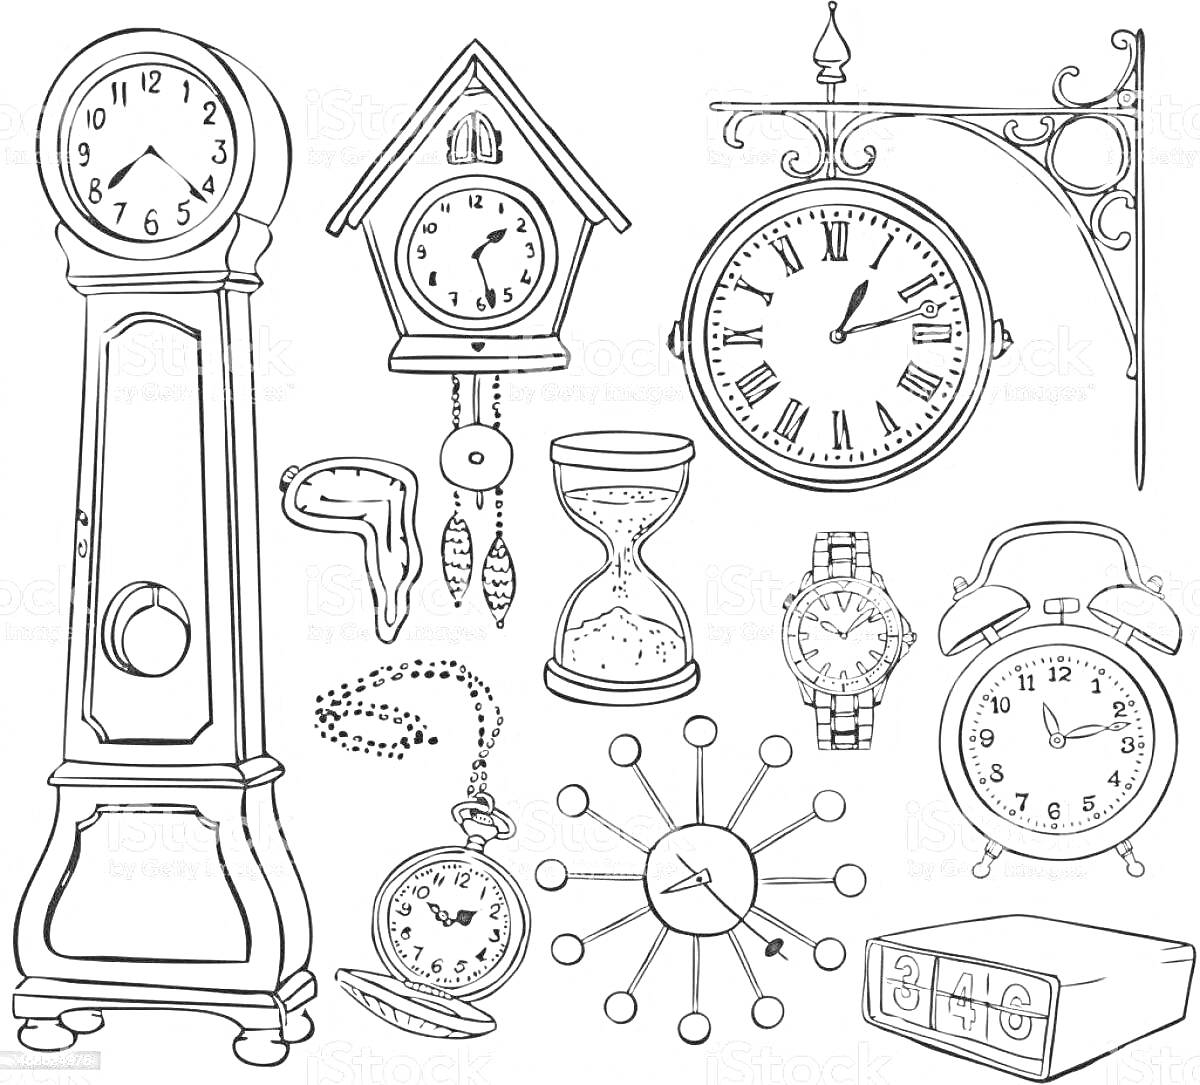 На раскраске изображено: Часы, Кукушка, Настенные часы, Песочные часы, Наручные часы, Карманные часы, Будильник, Электронные часы, Время